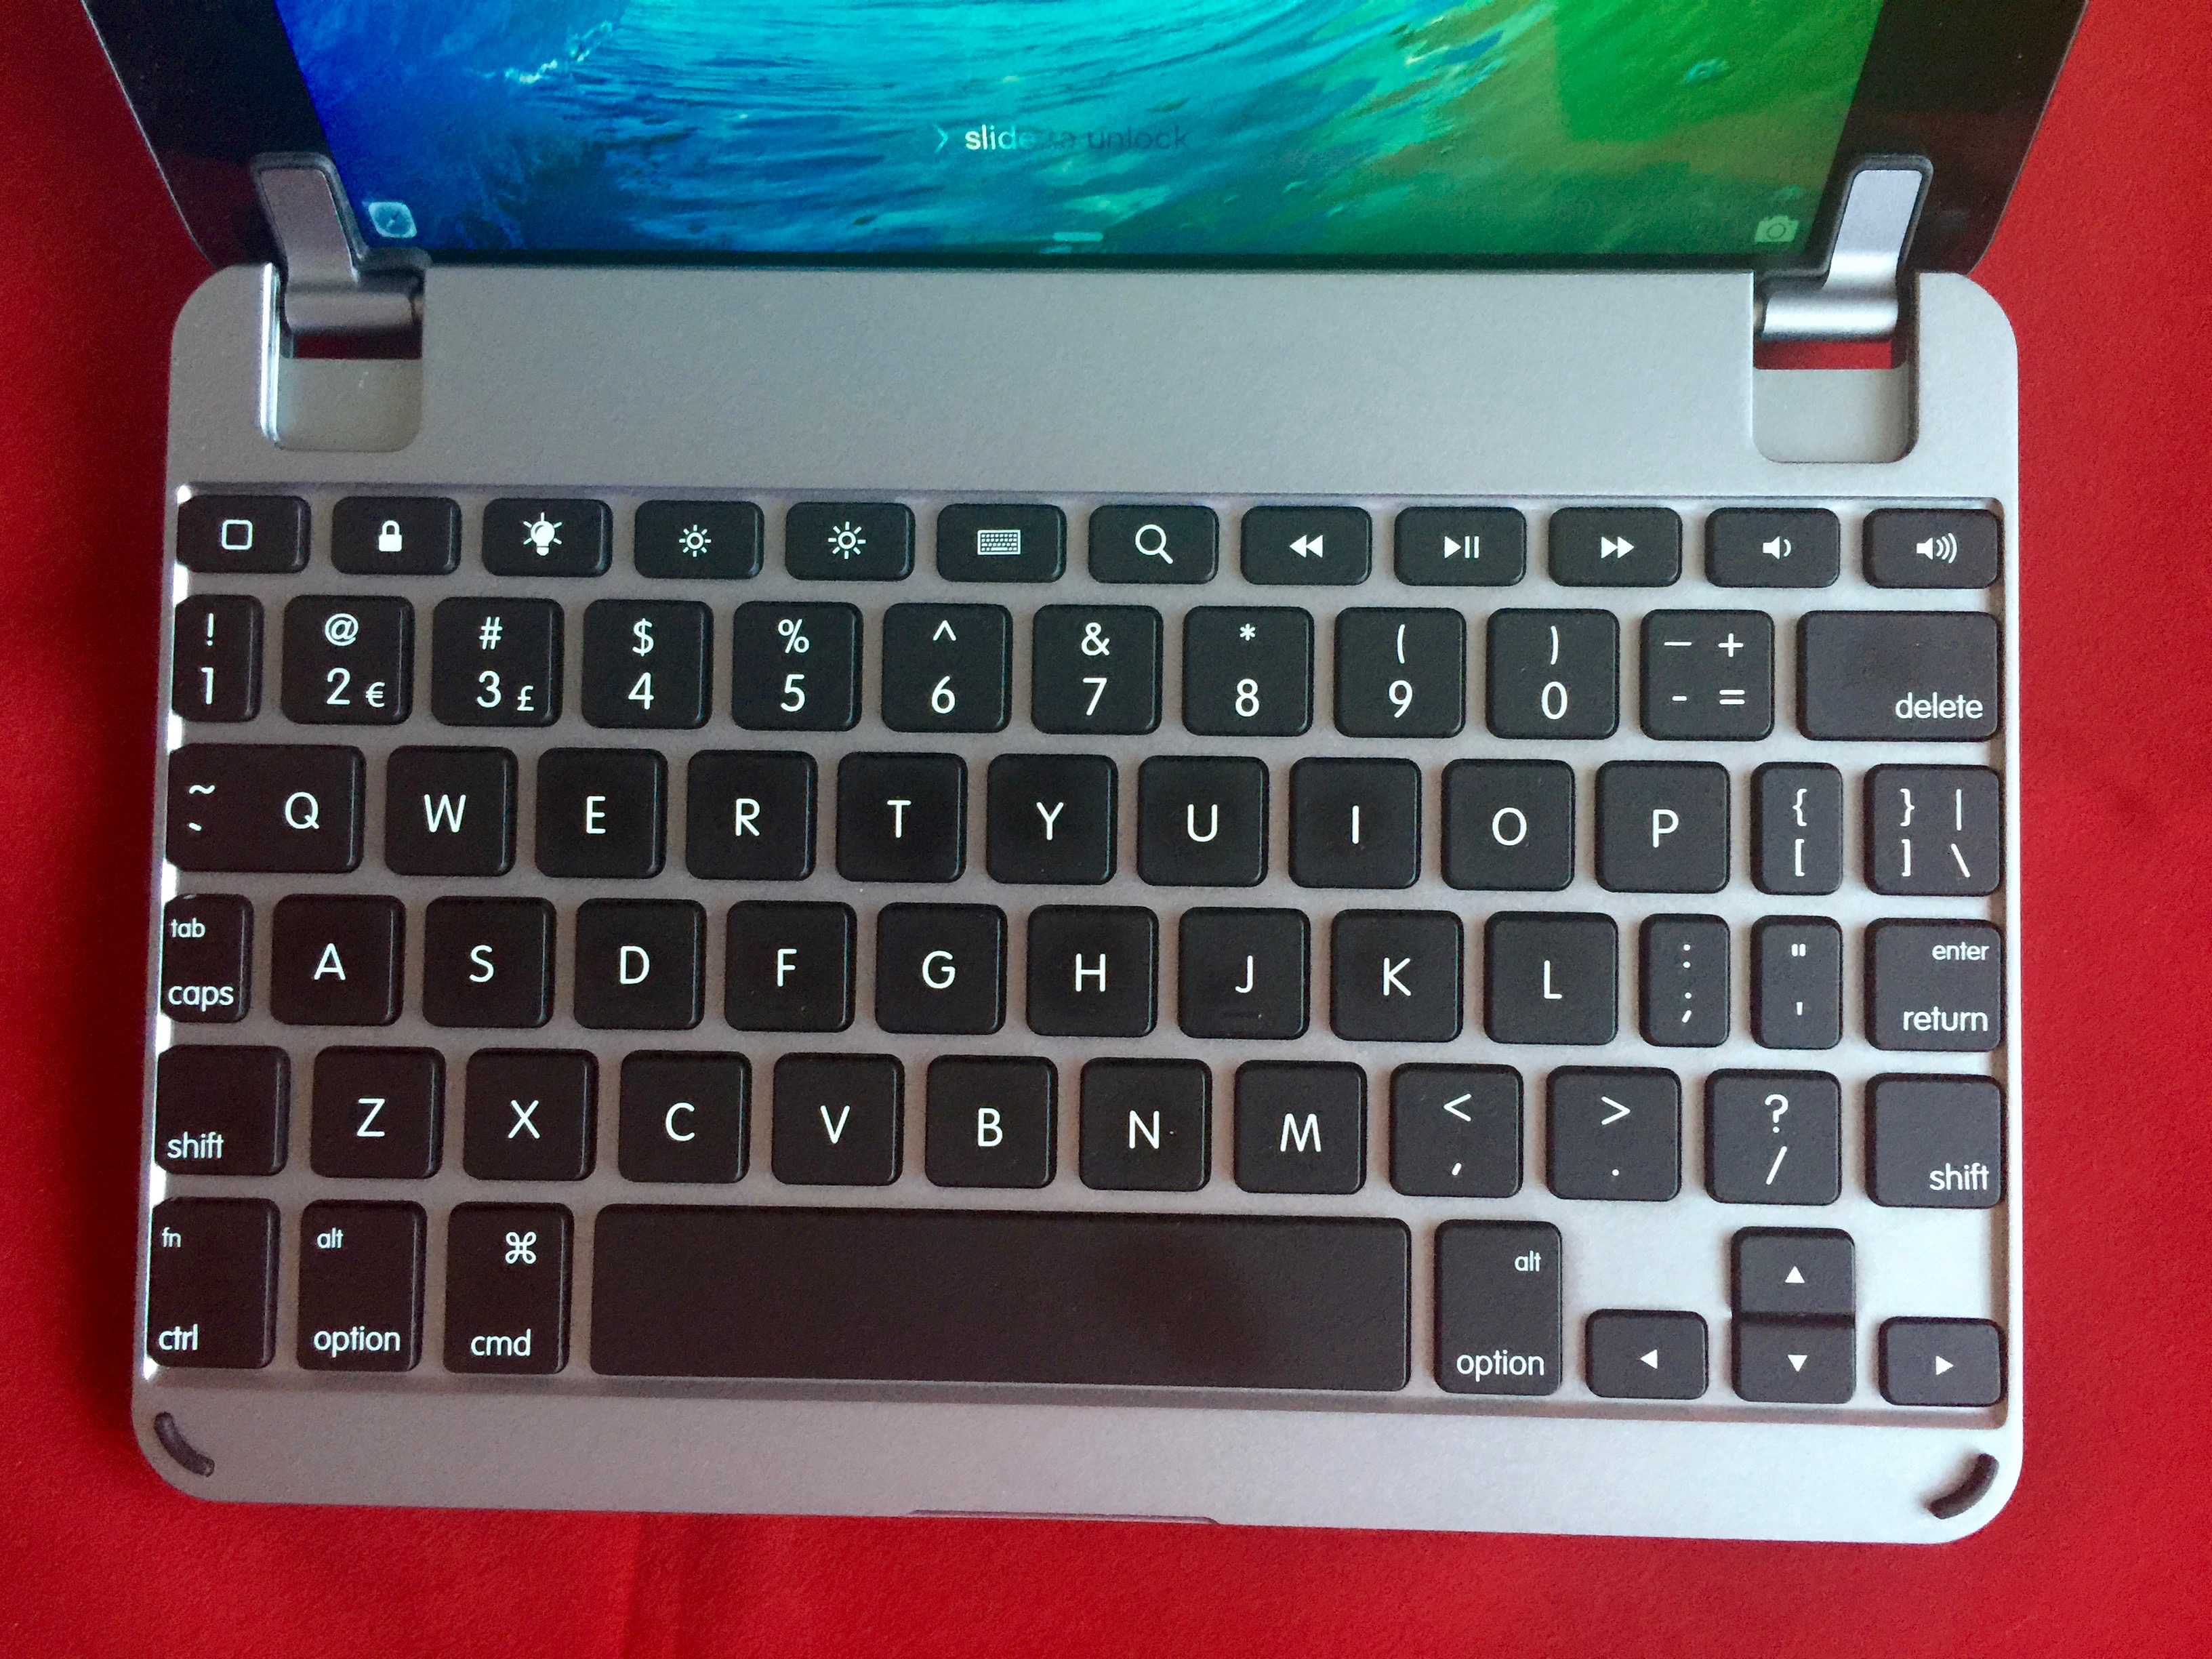 Mac mini keyboard and mouse